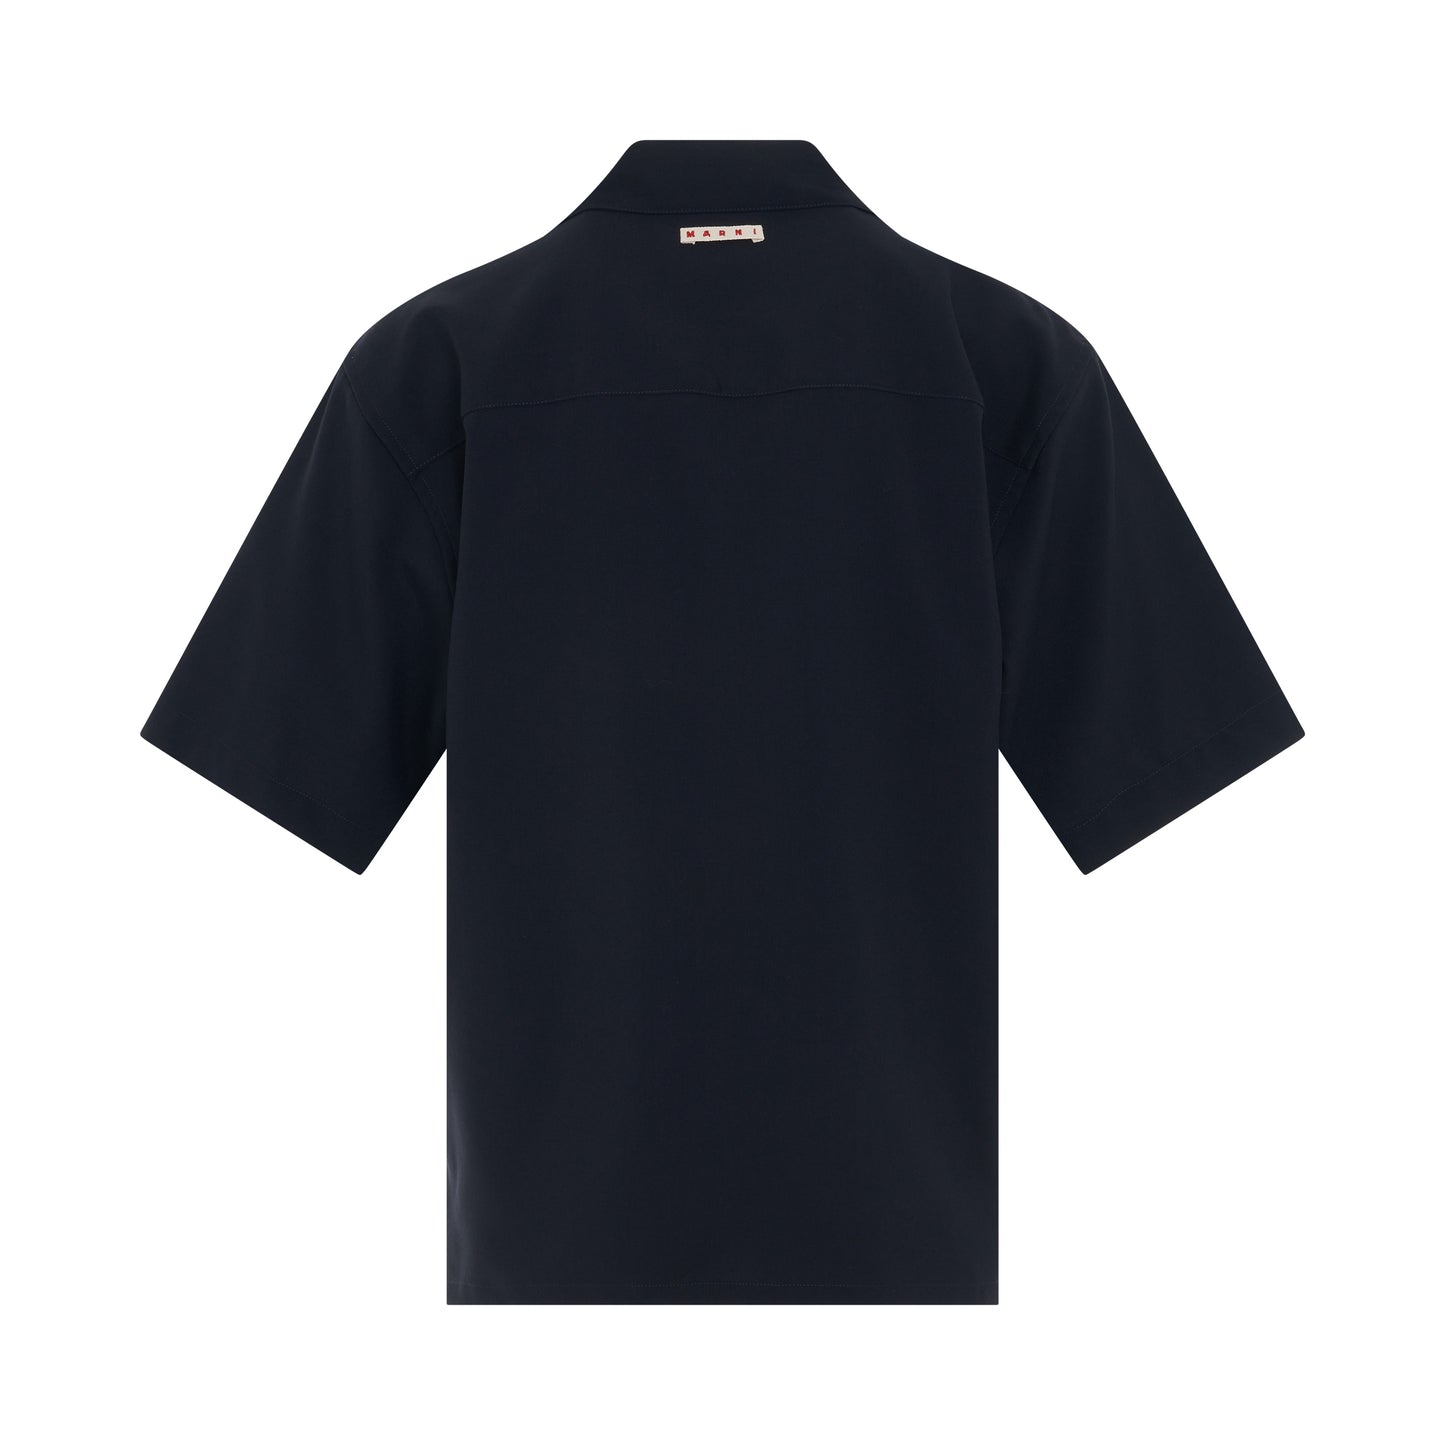 Wool Bowling Shirt in Blue Black